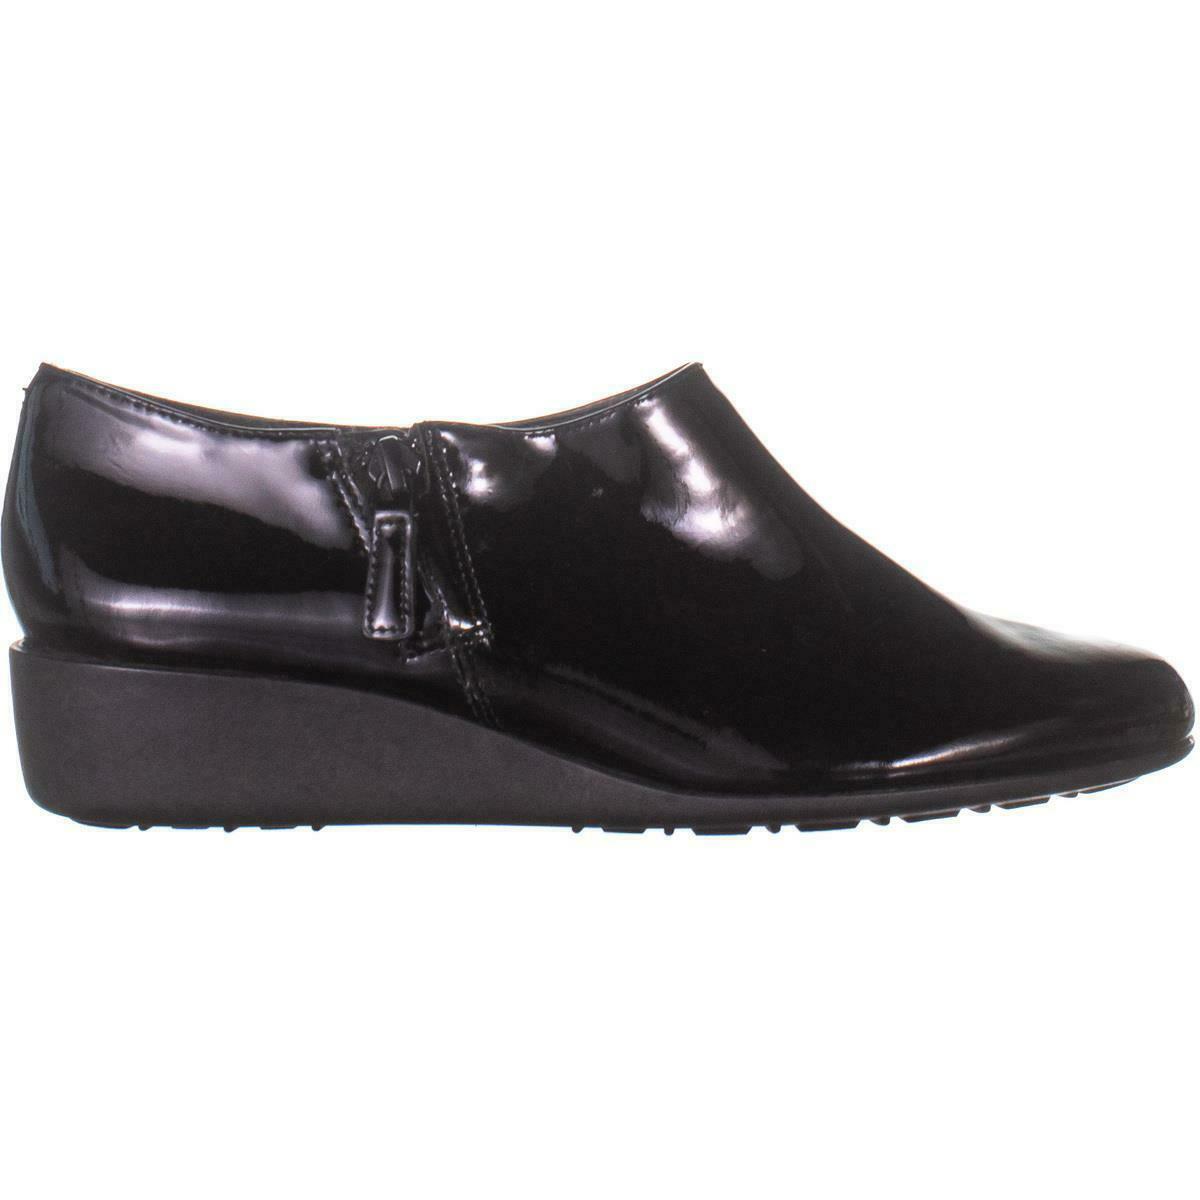 Cole Haan Callie Slip-On Waterproof Rain Shoes 335, Black, 6 US - Boots